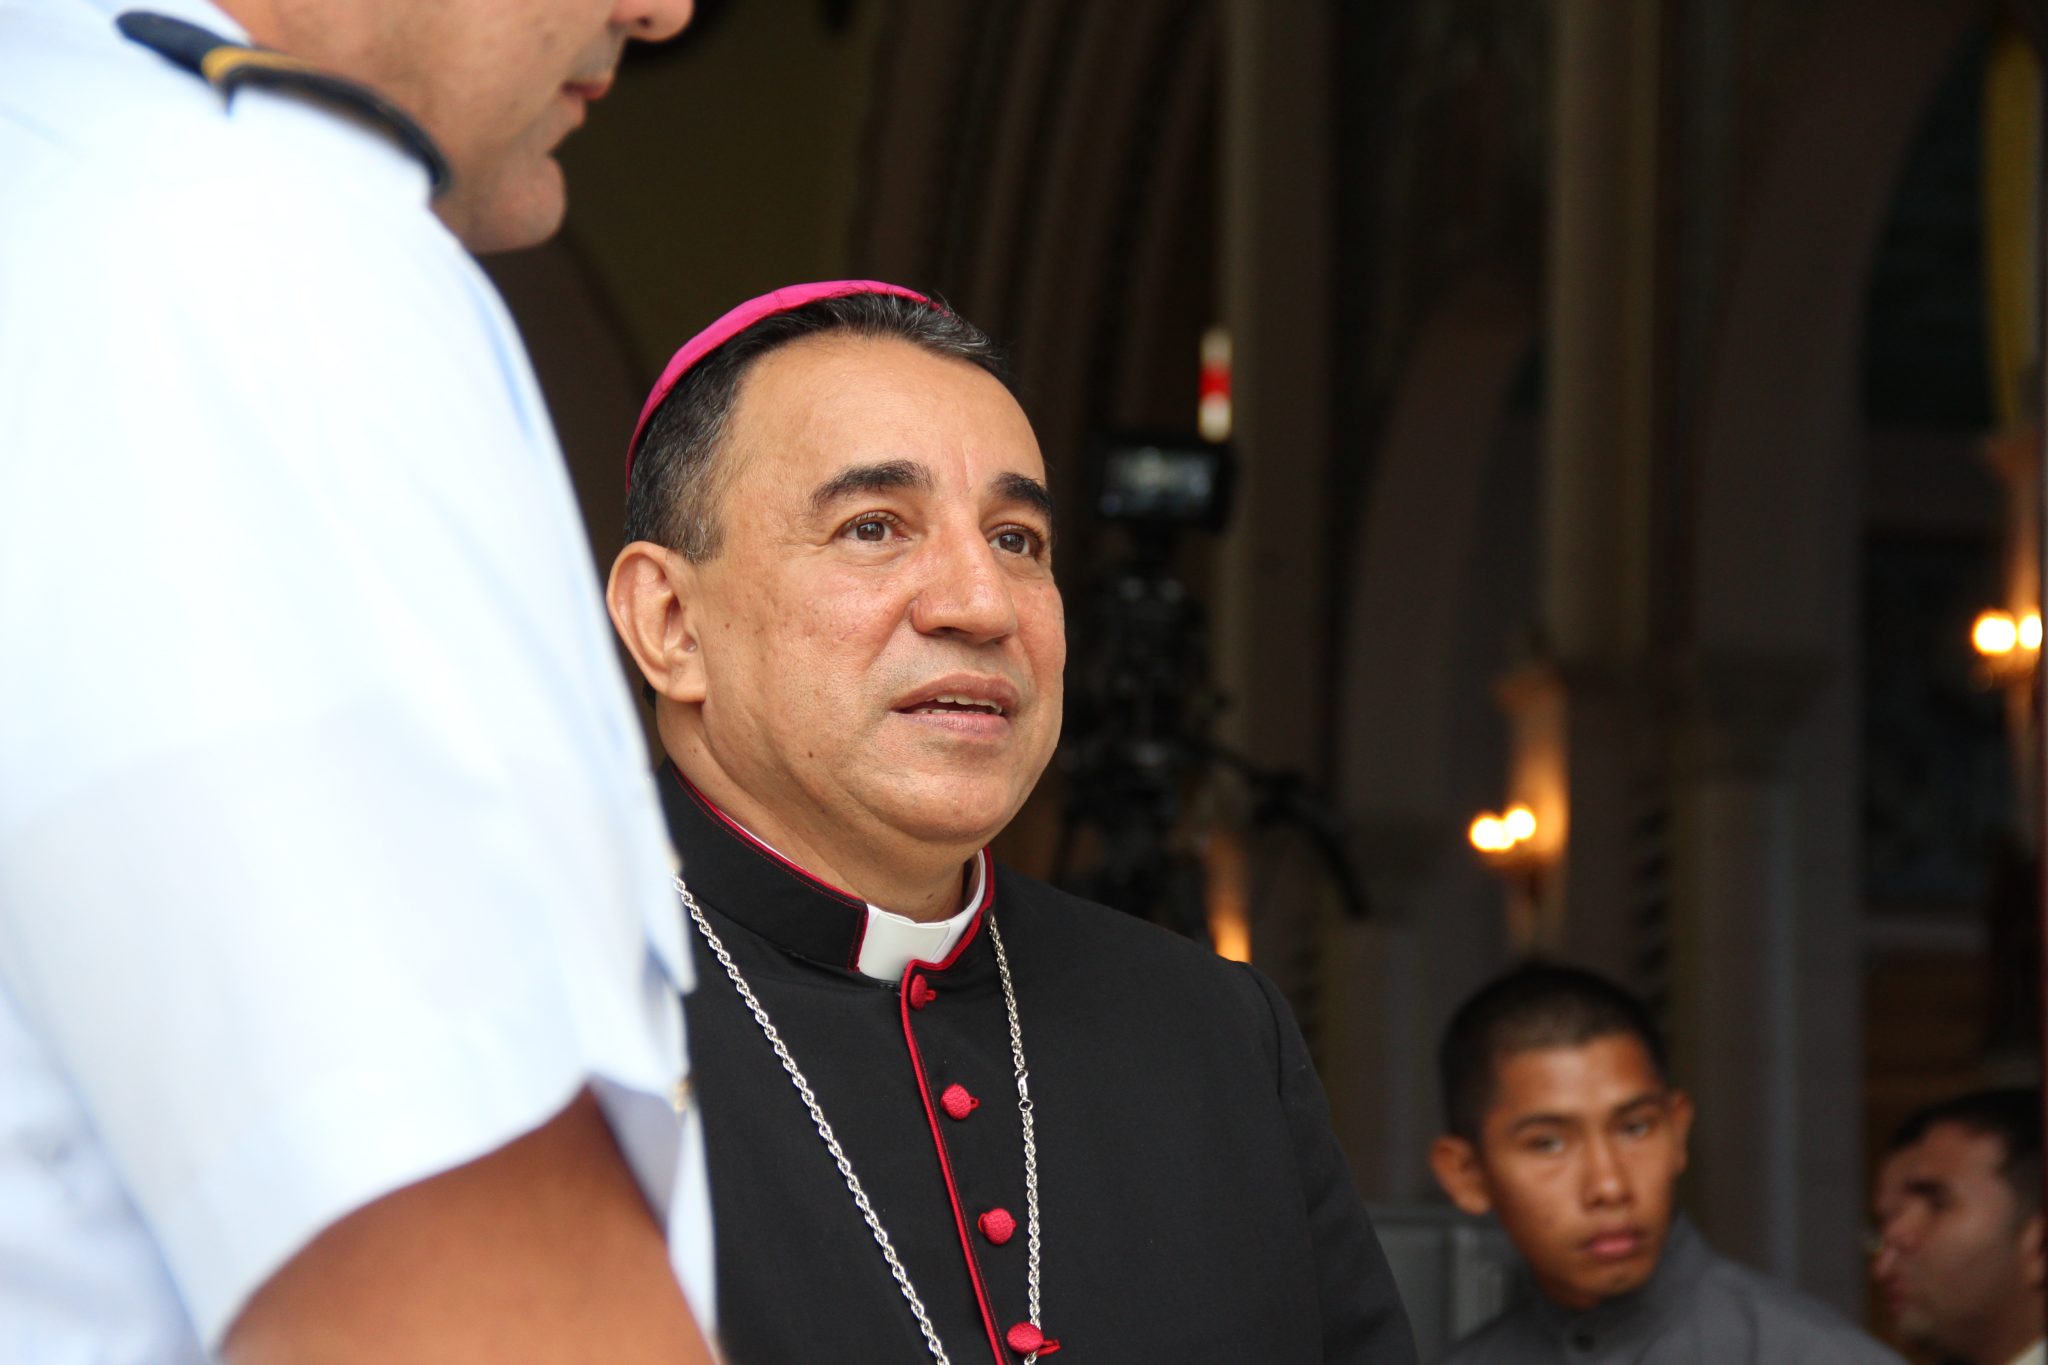 Arzobispo de Panamá viaja a Alemania a promover la JMJ